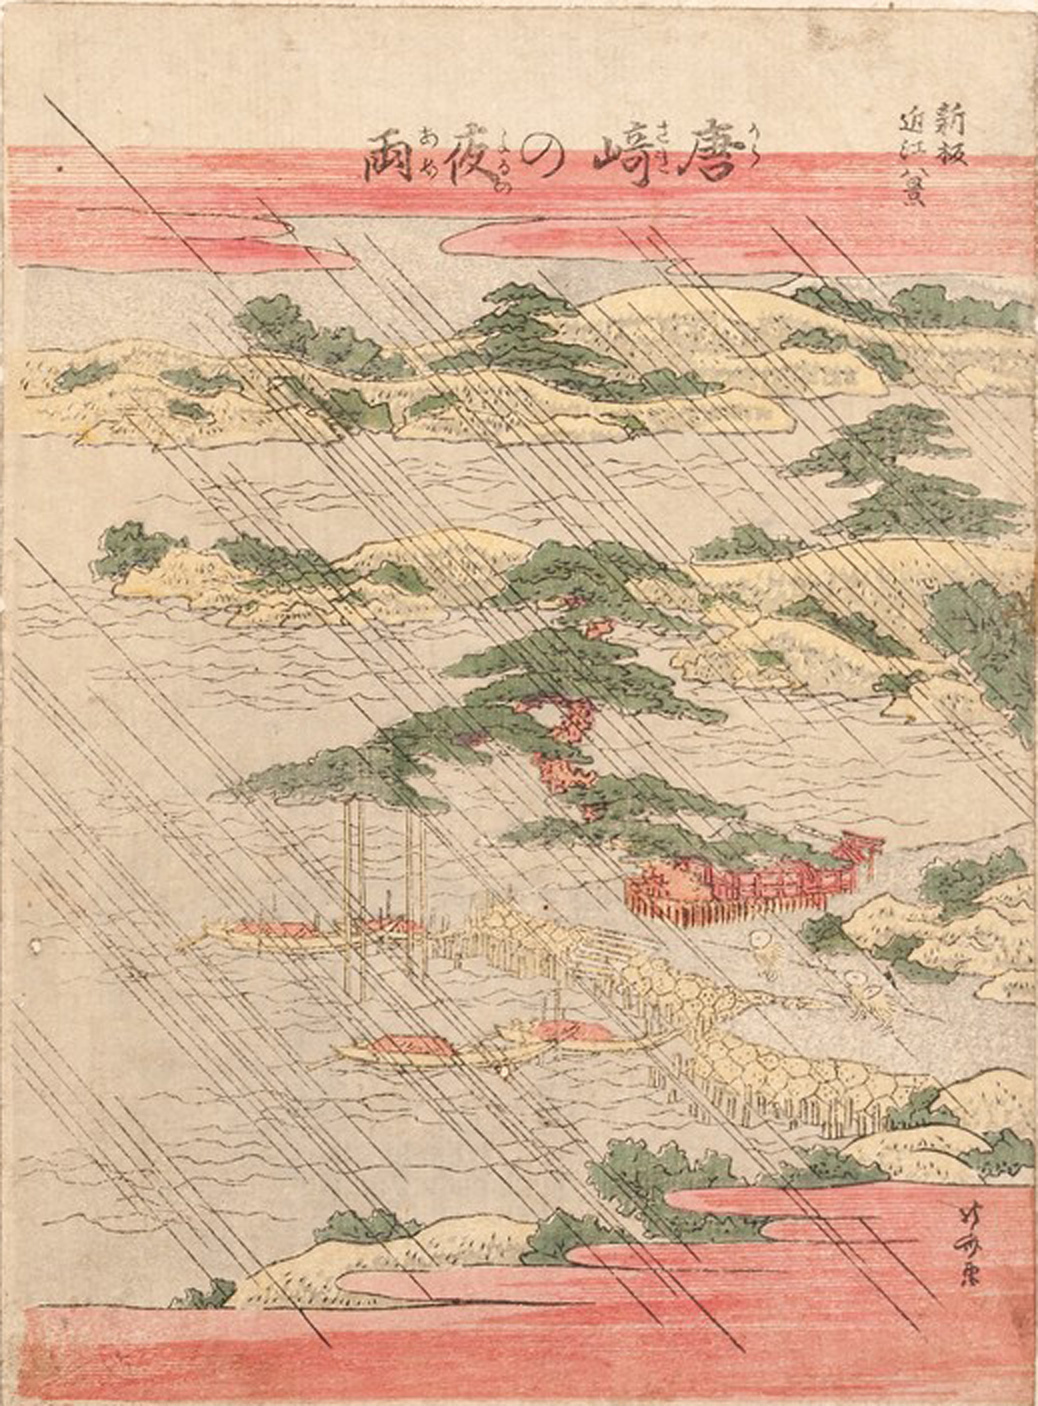 Hokusai - Night Rain at Karasaki - 1802 Vertical Edition